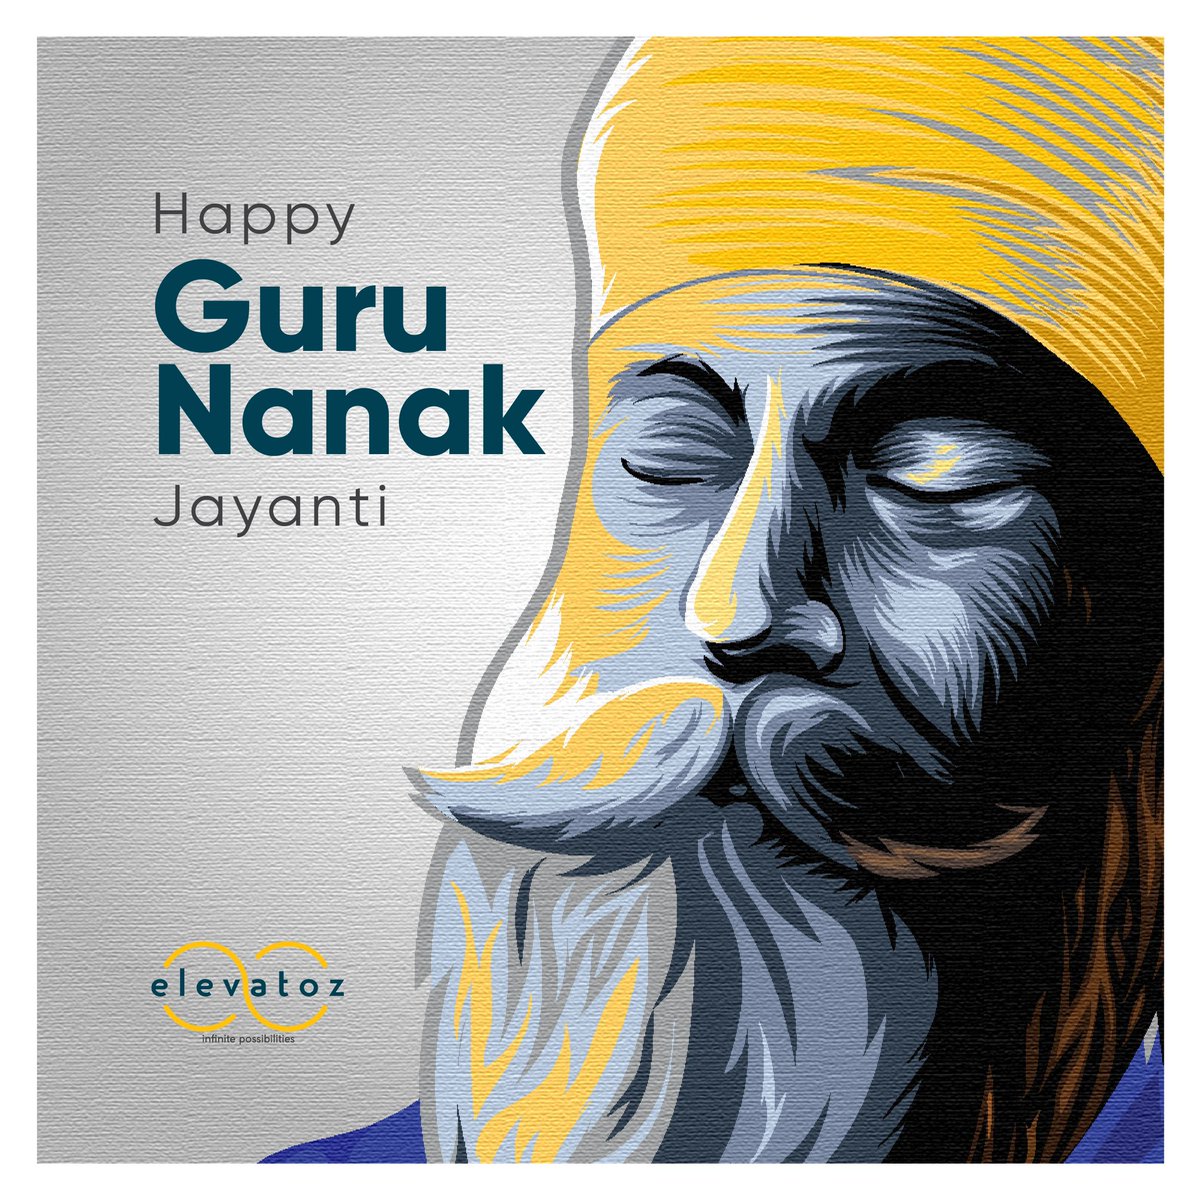 🎉 Celebrate the auspicious occasion of Guru Nanak Jayanti with heartfelt wishes from all of us at Elevatoz Loyalty. 🙏 #GuruNanakJayanti #PeaceAndBlessings #ElevatozLoyalty #ChannelPartner